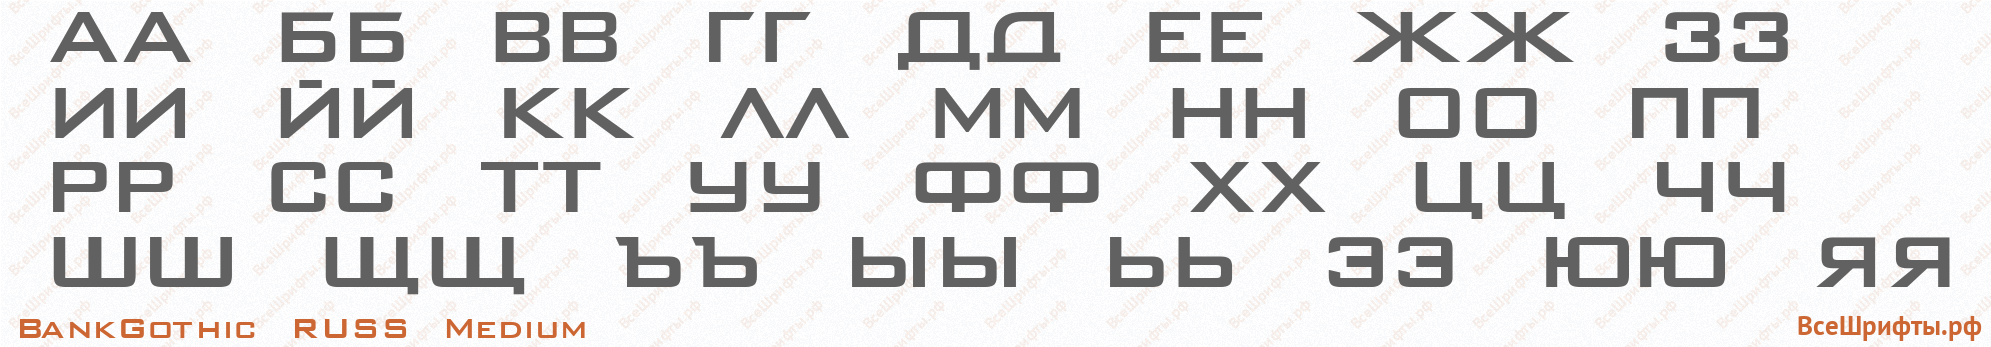 Шрифт BankGothic RUSS Medium с русскими буквами